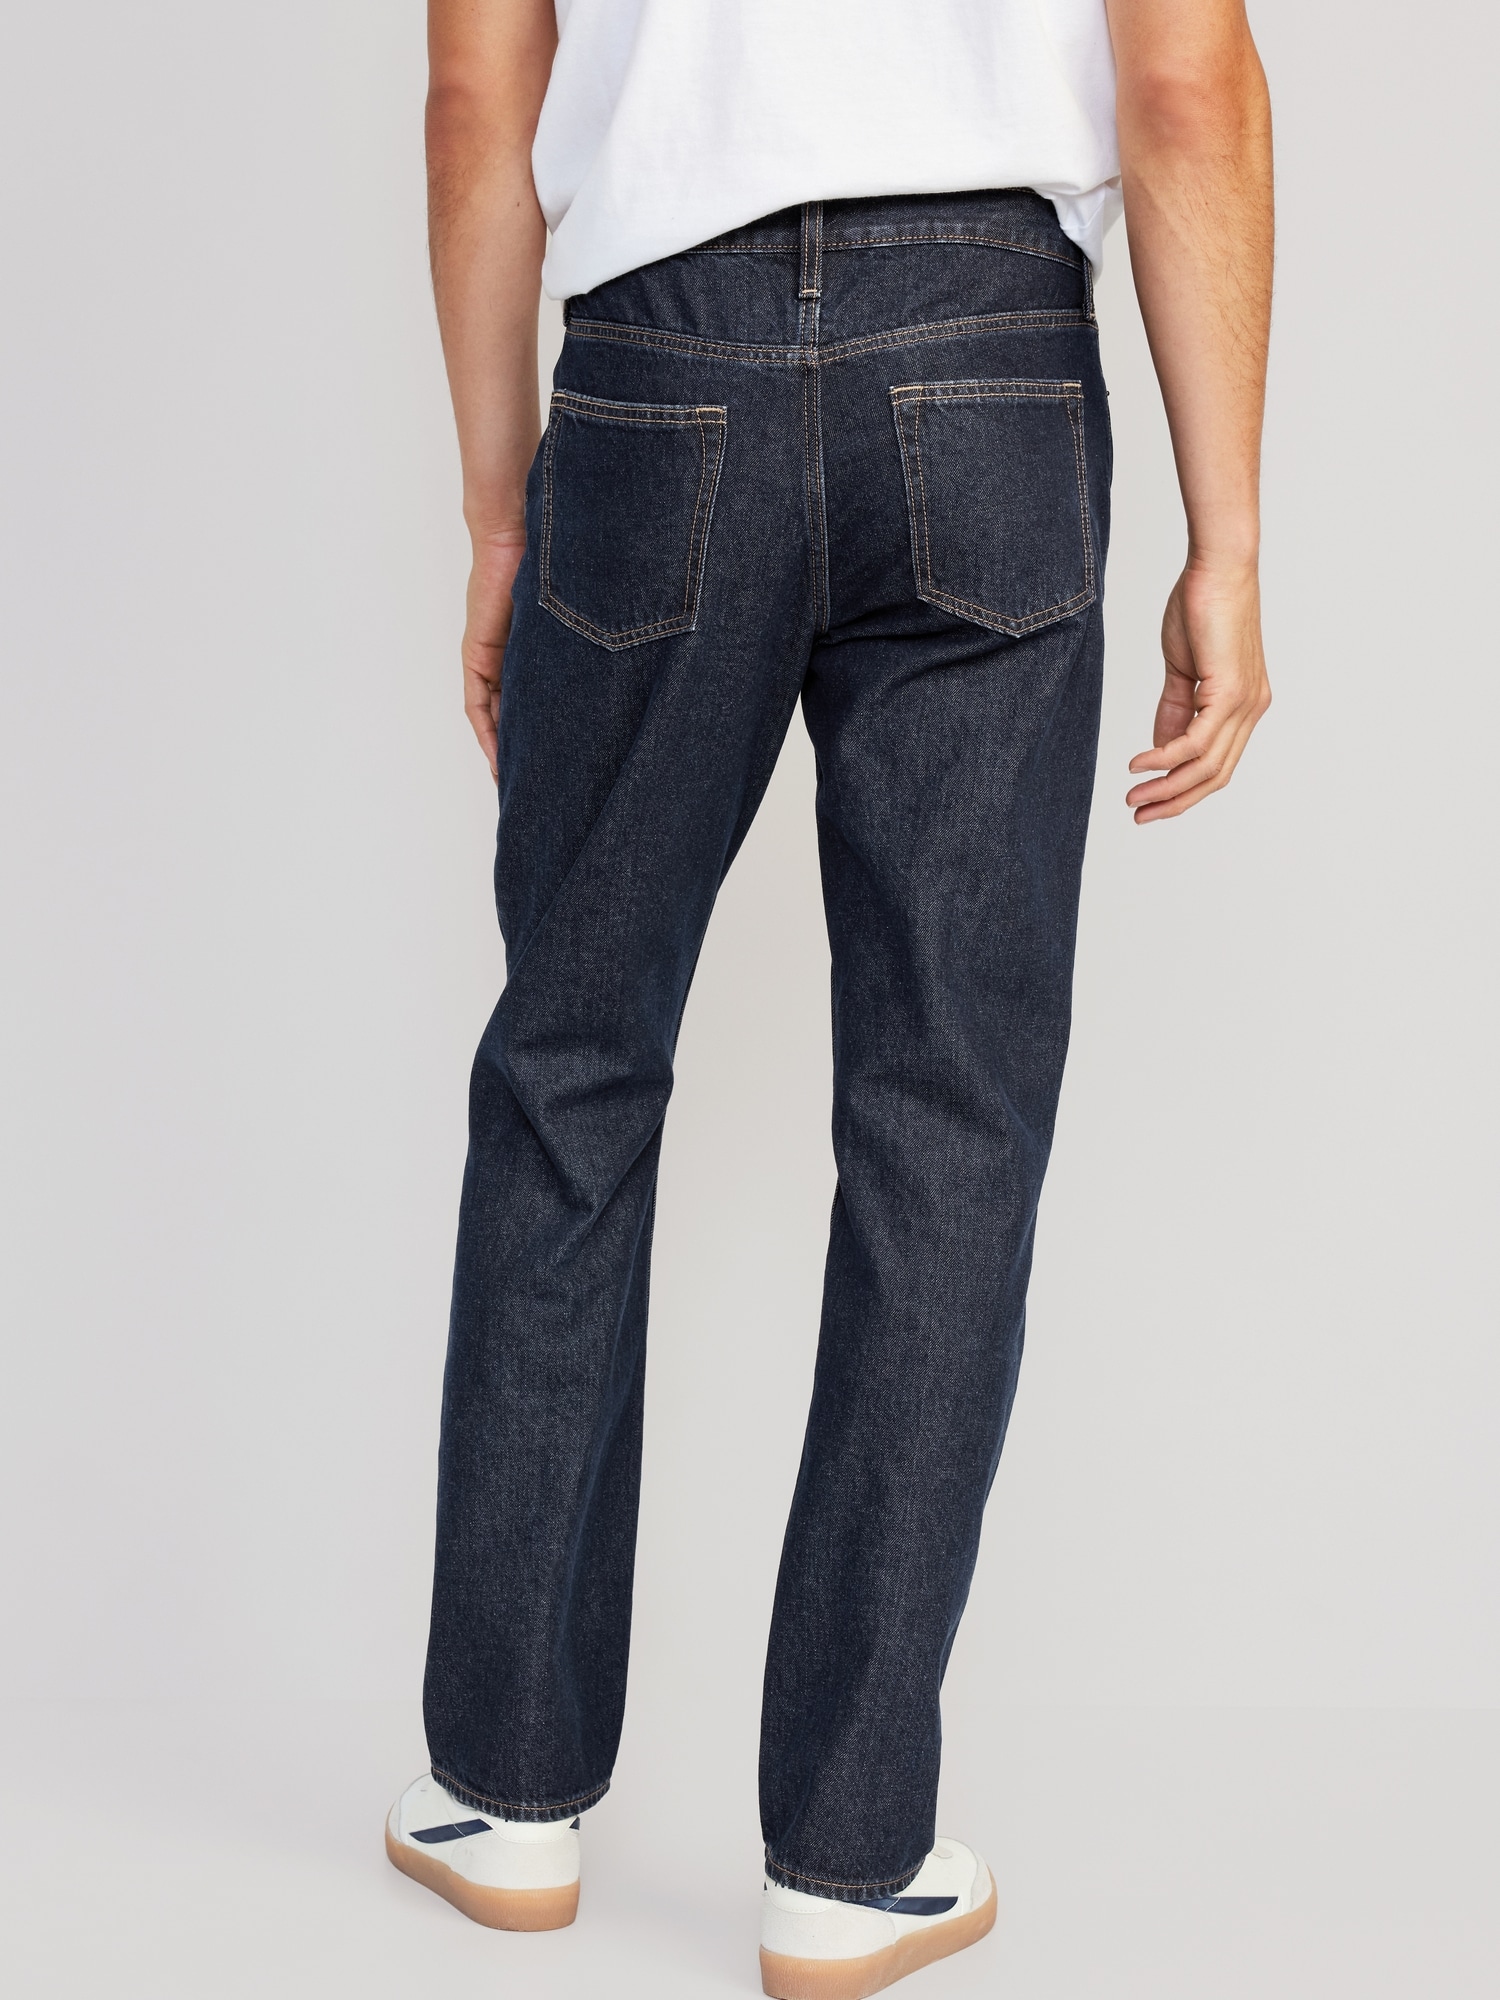 Slim Mens Denim Jeans at Best Price in Guwahati | Ganesh Enterprise